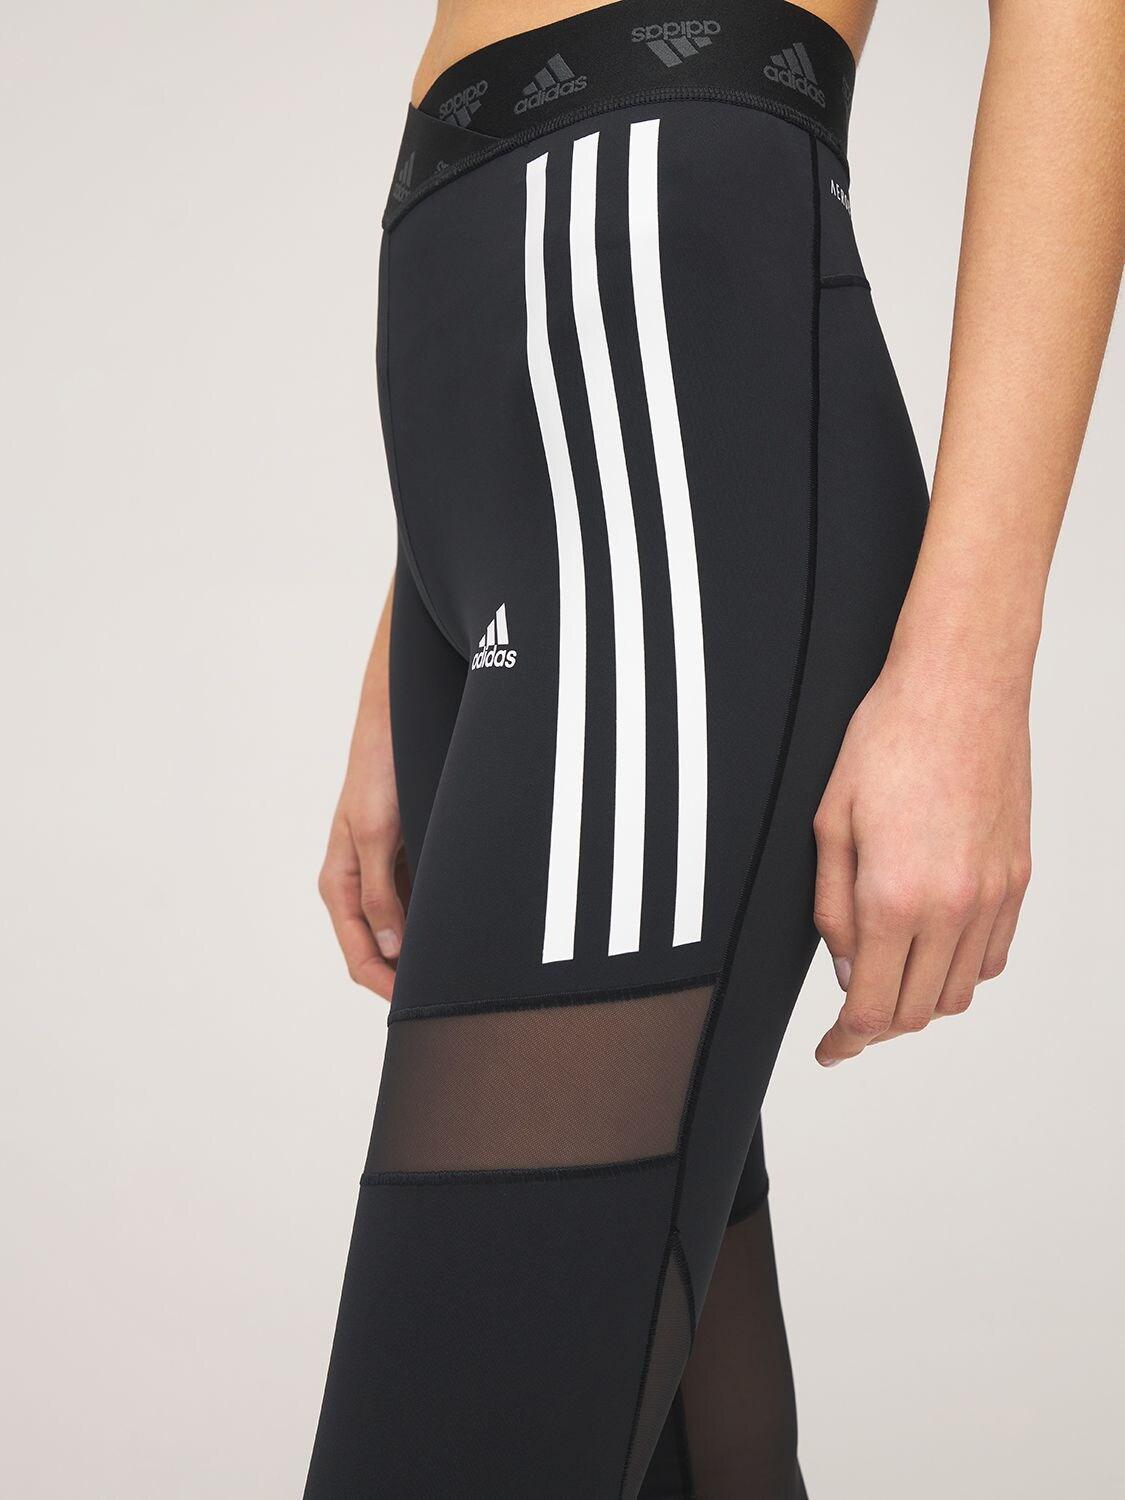 Adidas Womens Mesh Legging Black Flash Sales, SAVE 50% - primera-ap.com